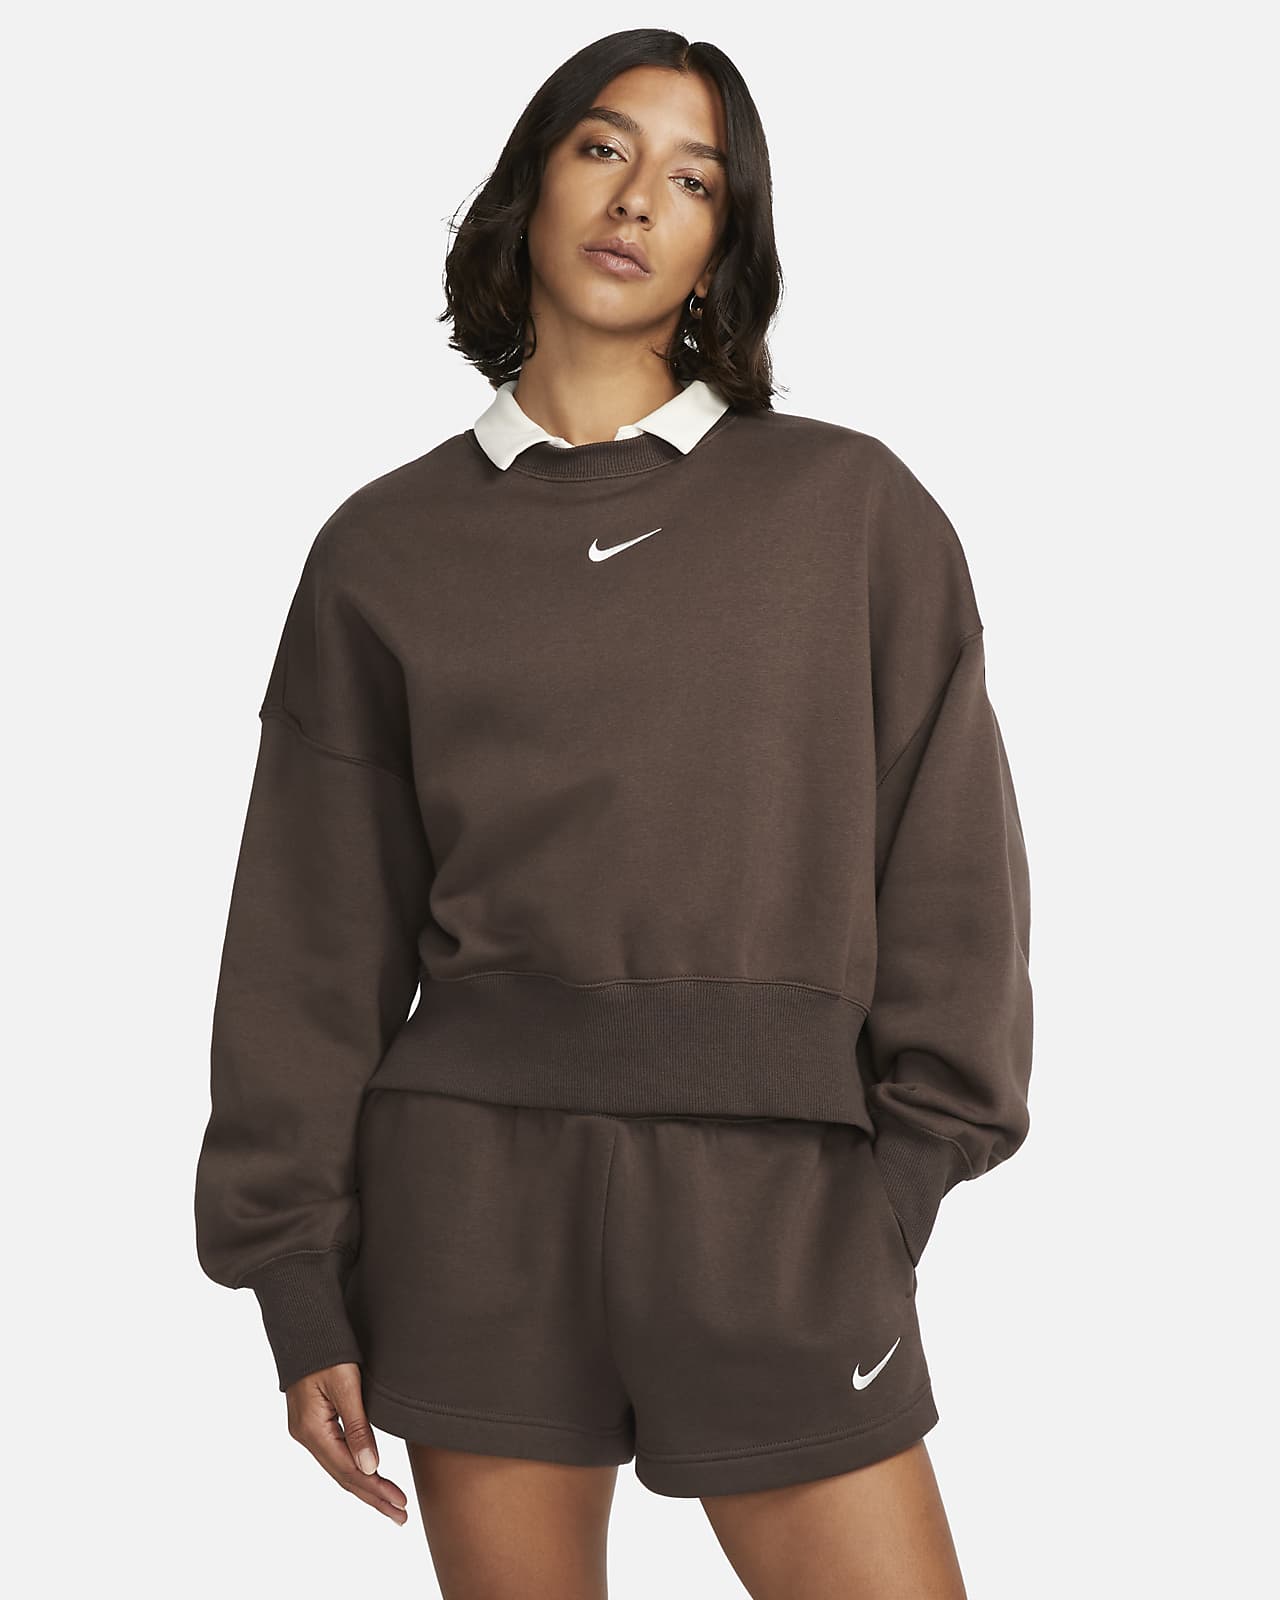 dynamisch schaal kat Nike Sportswear Phoenix Fleece Women's Over-Oversized Crewneck Sweatshirt.  Nike.com